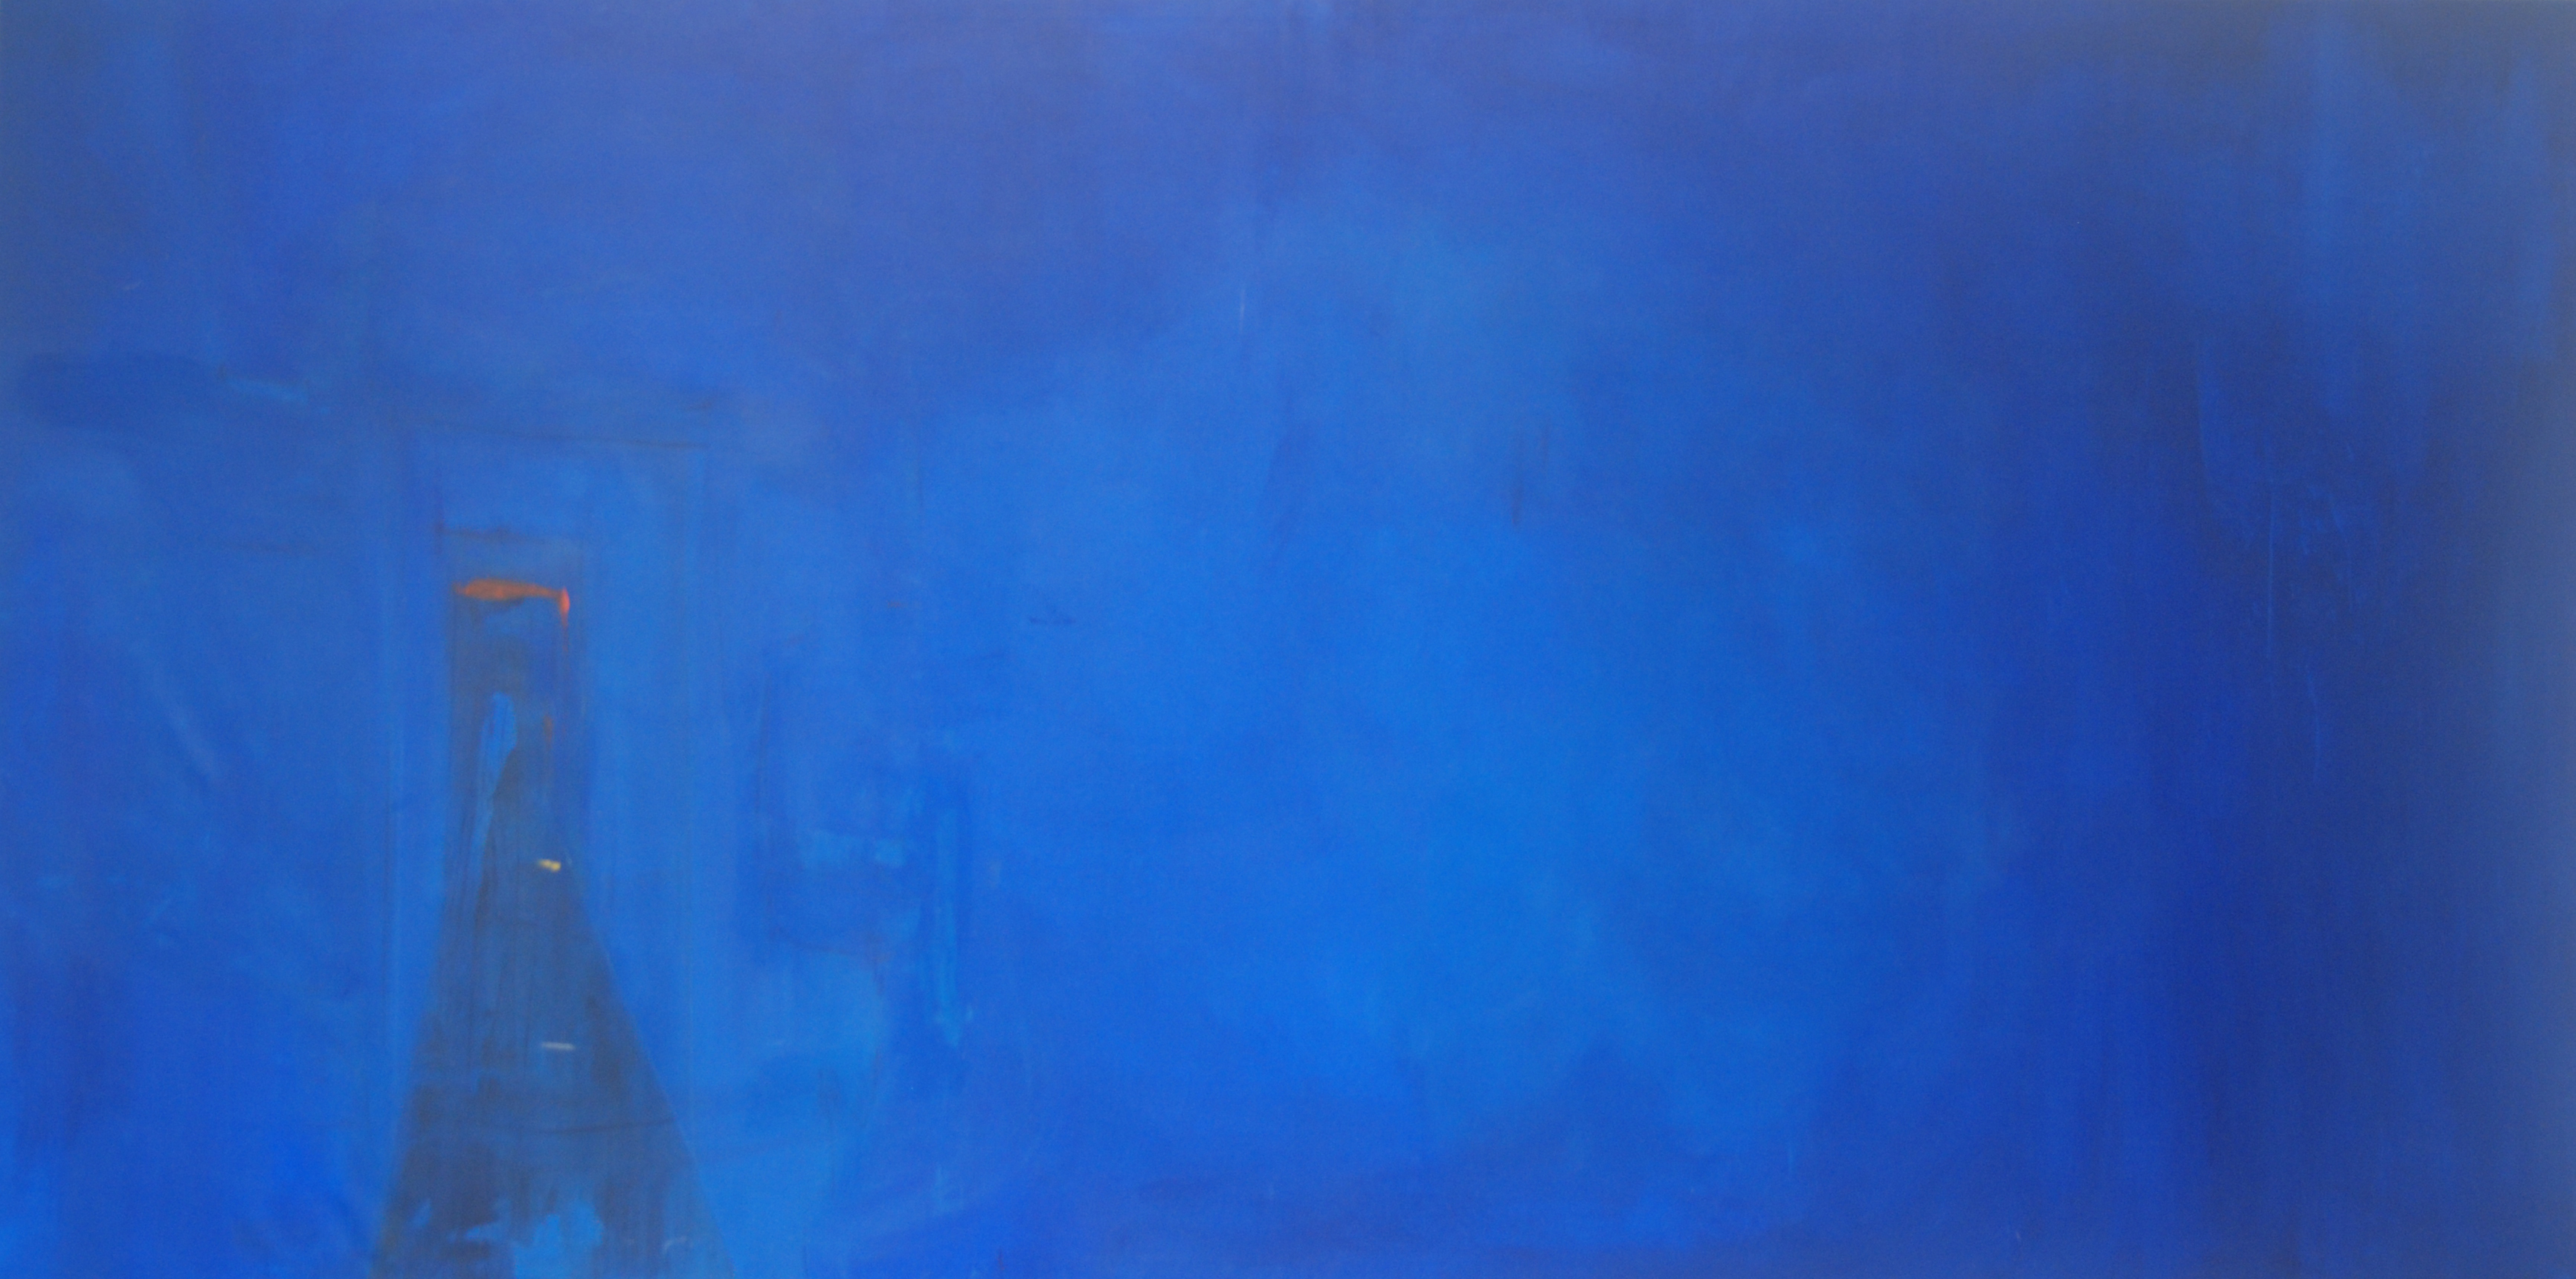 Gianluca Patti, Untitled After James Turrell, 2014, cm 138 x 278, acrilico e tecnica mista su tela